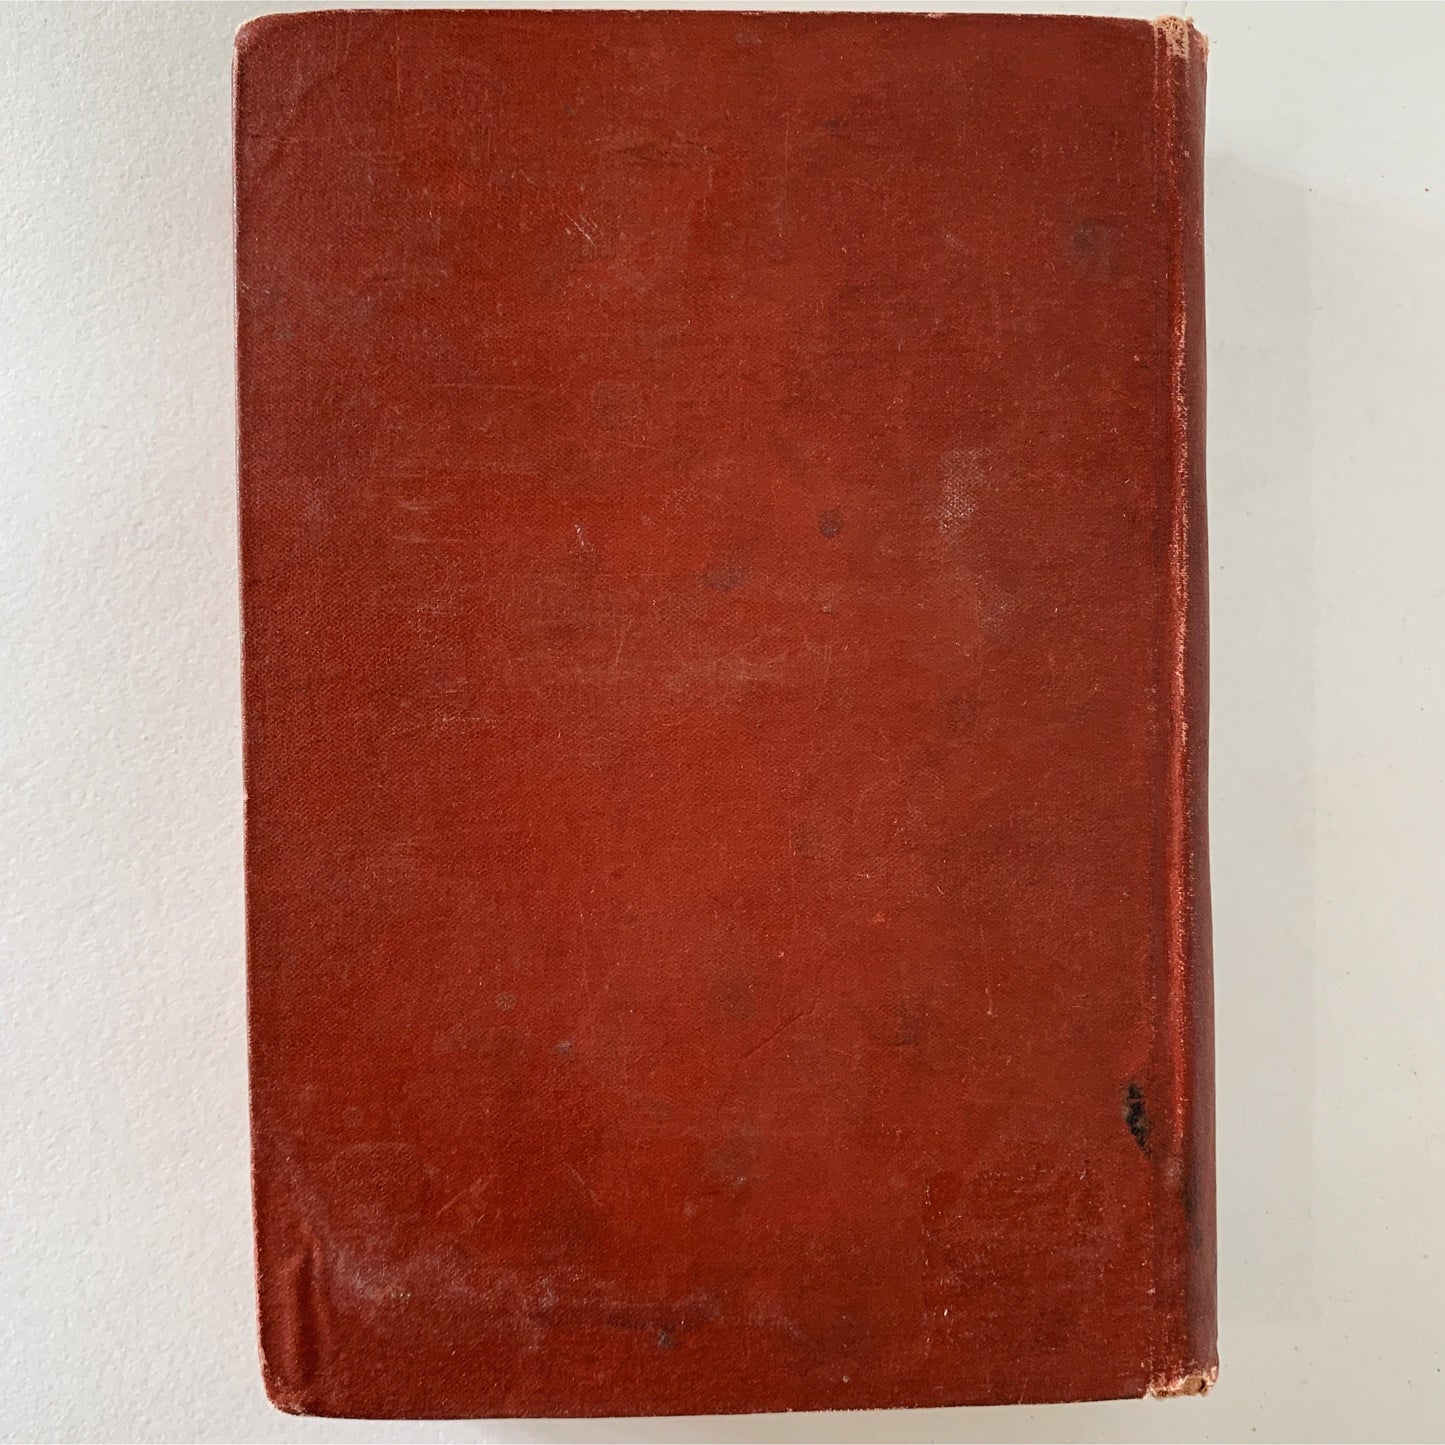 Mrs Rorer's Philadelphia Cook Book: A Manual of Home Economics, 1886